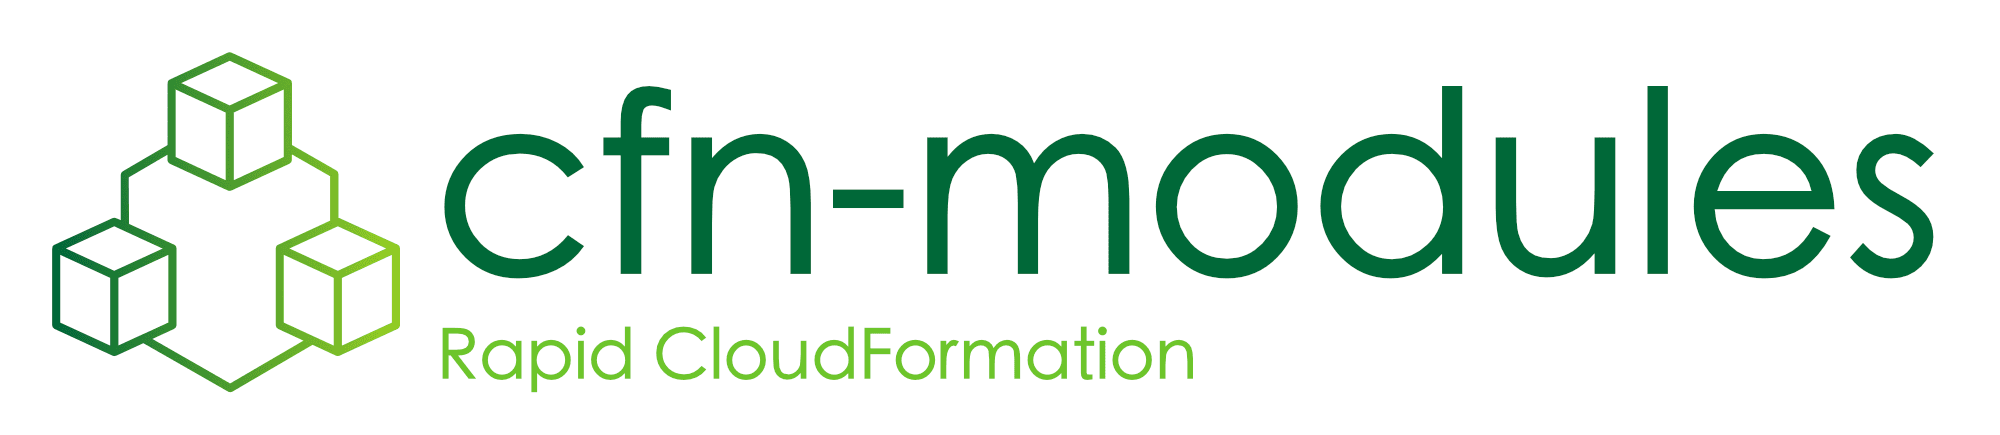 Rapid CloudFormation: cfn-modules